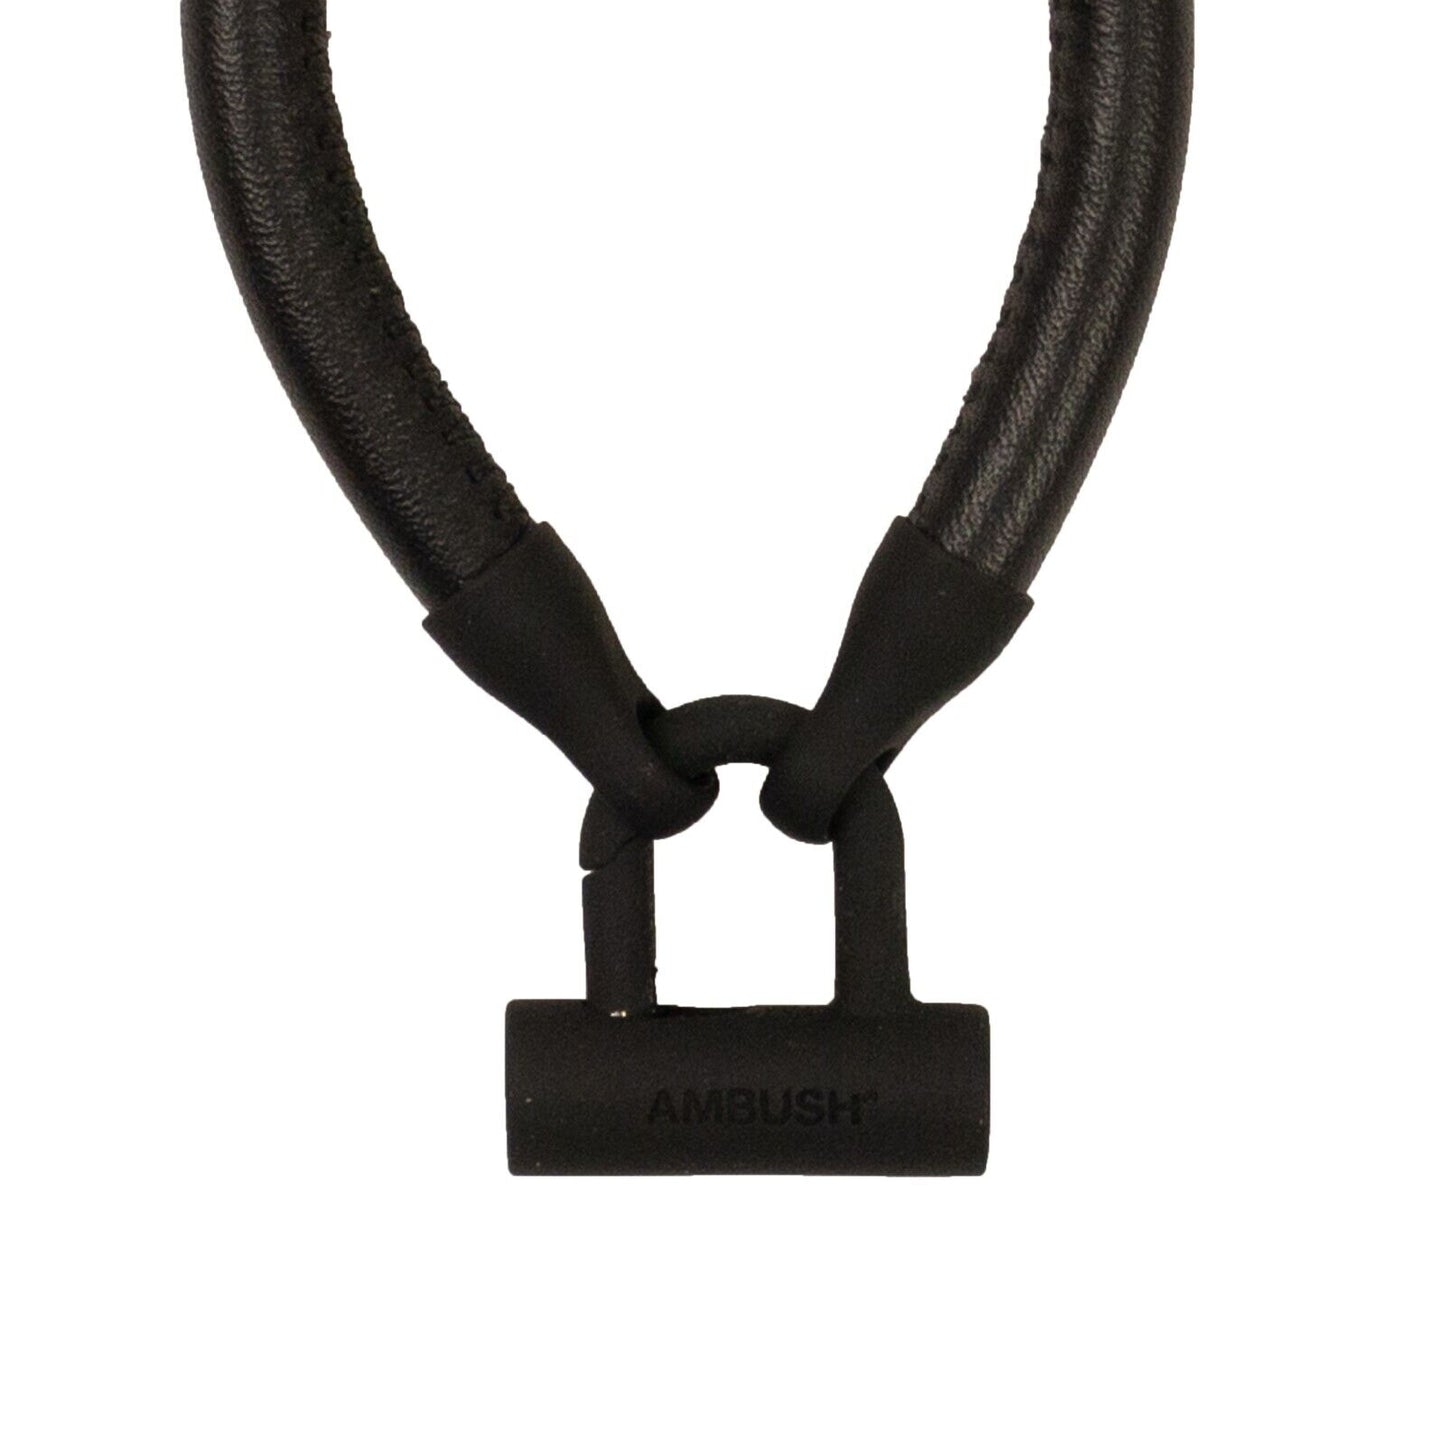 Ambush Bike Lock Leather Bracelet - Black